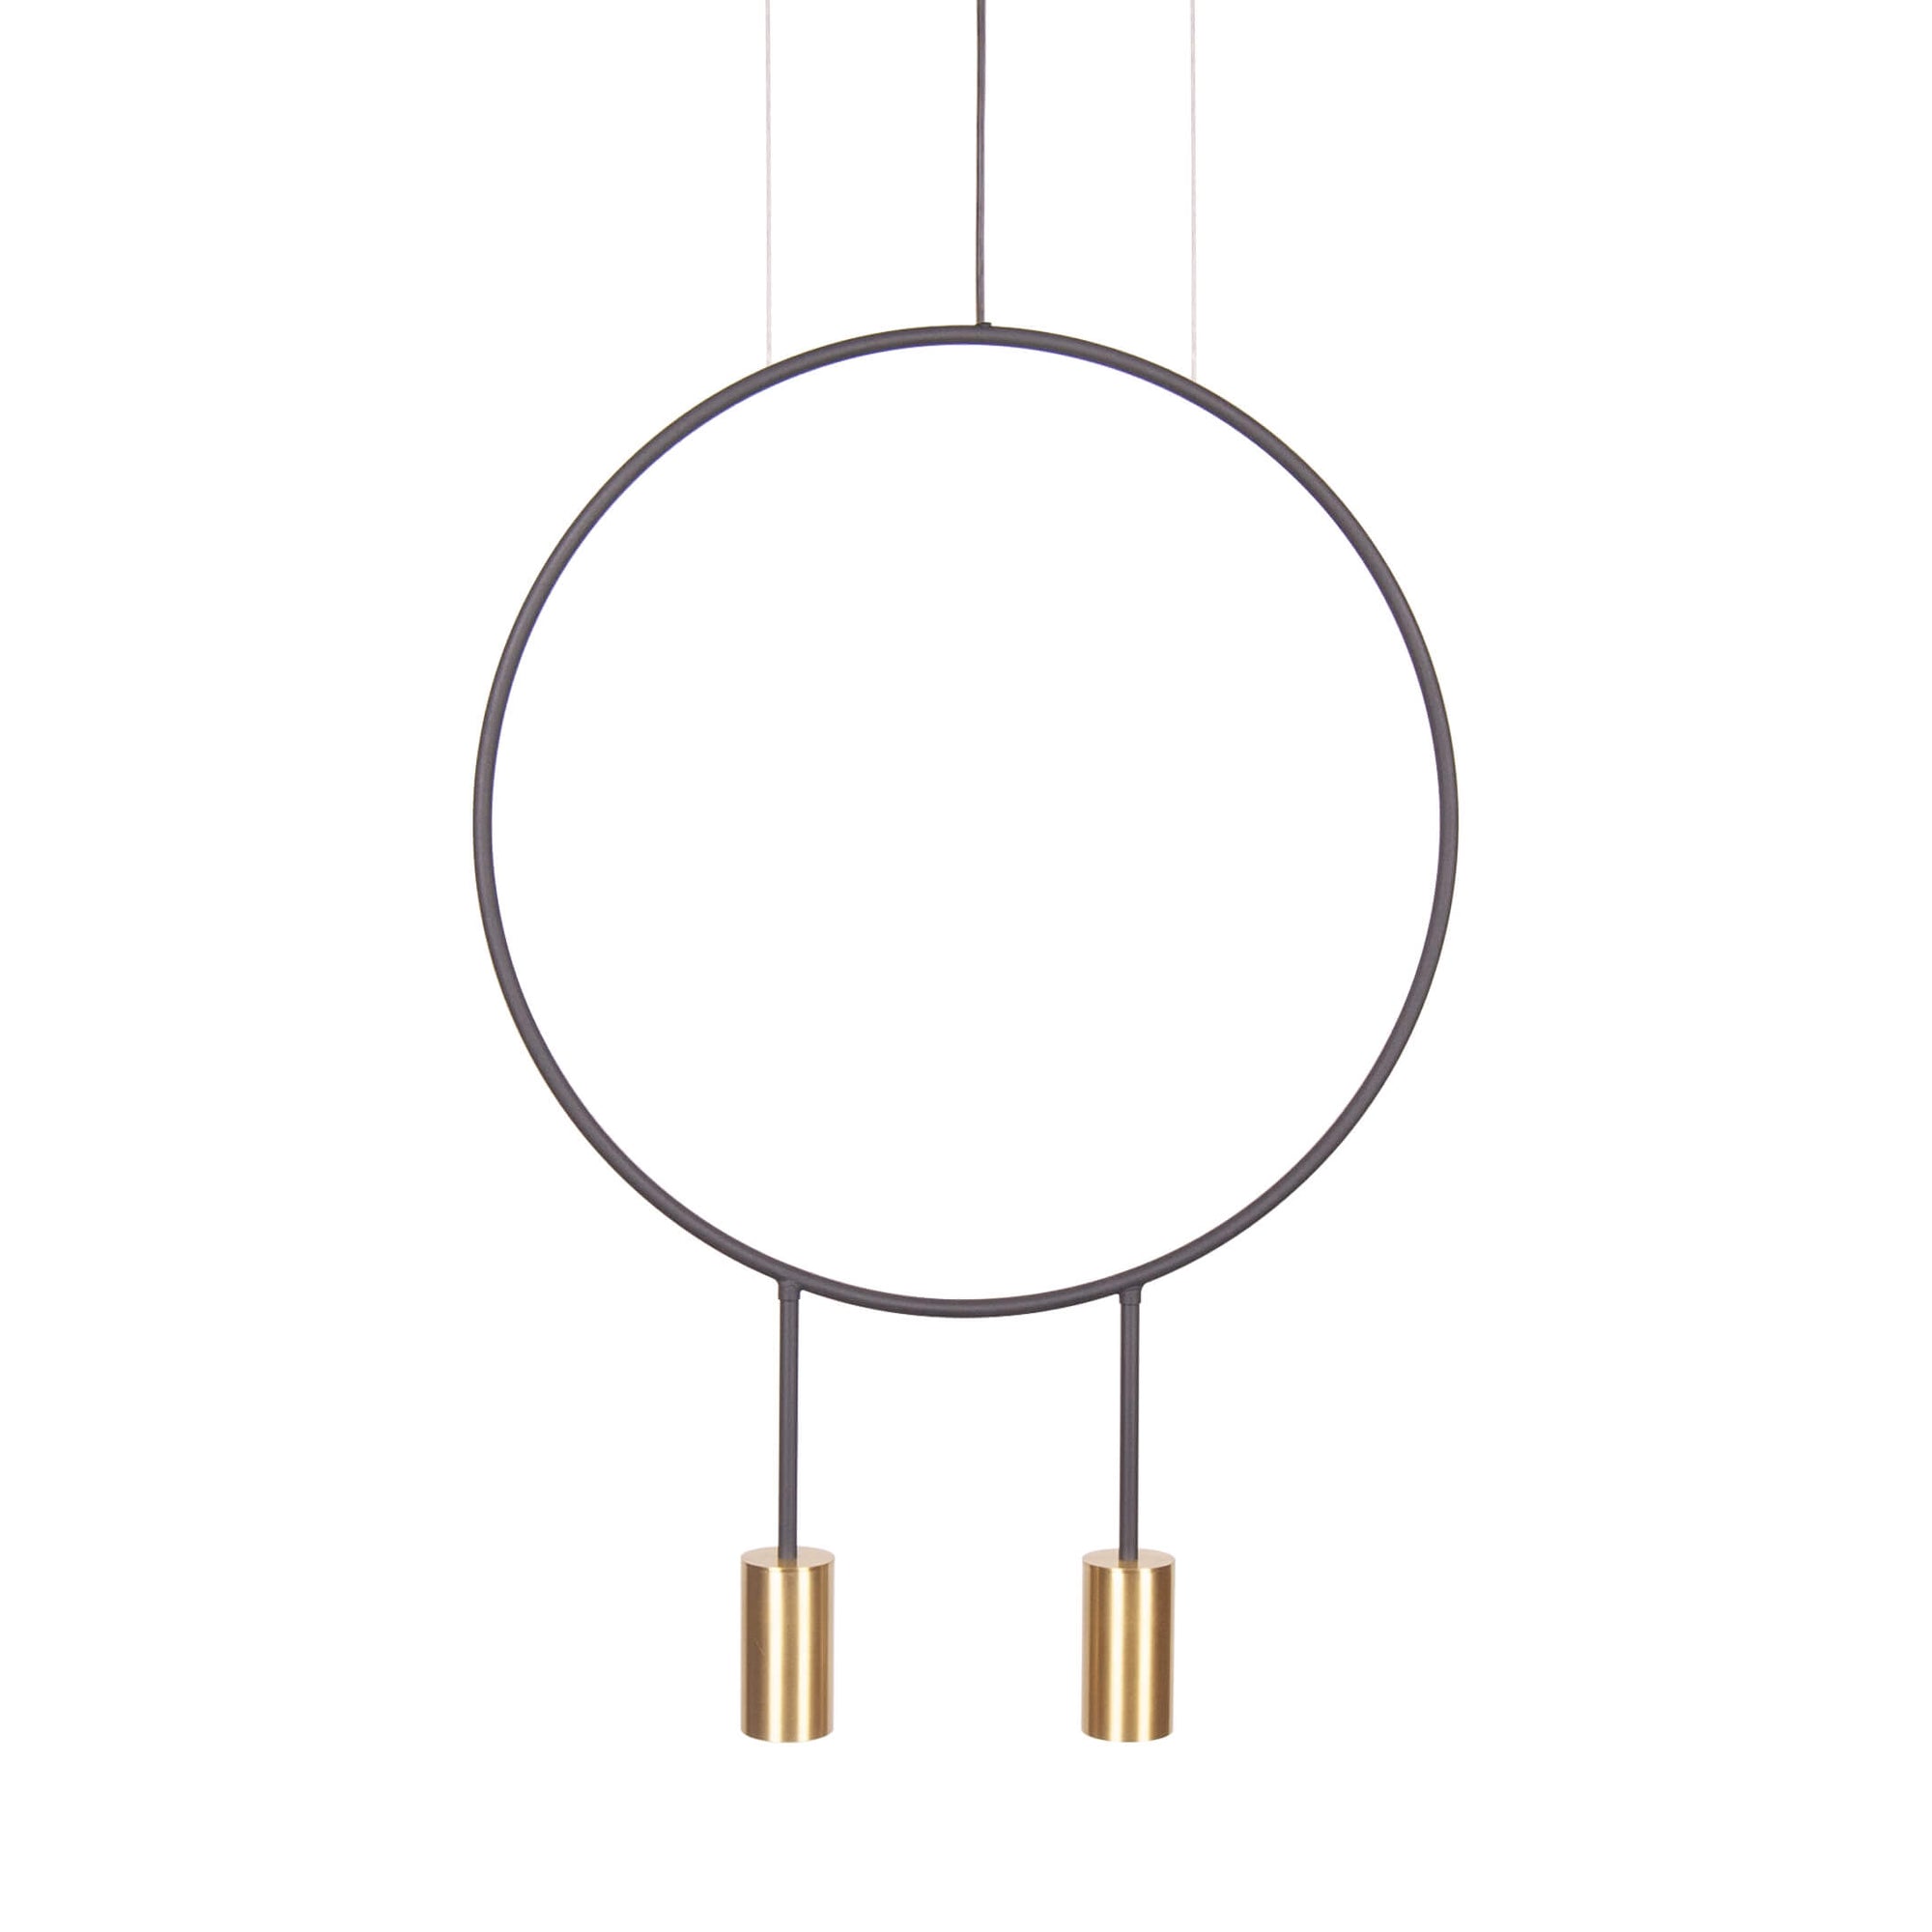 Pendul GISELLE SR2 – Design glam, chic, modern, Corp de iluminat din metal pentru living, dining